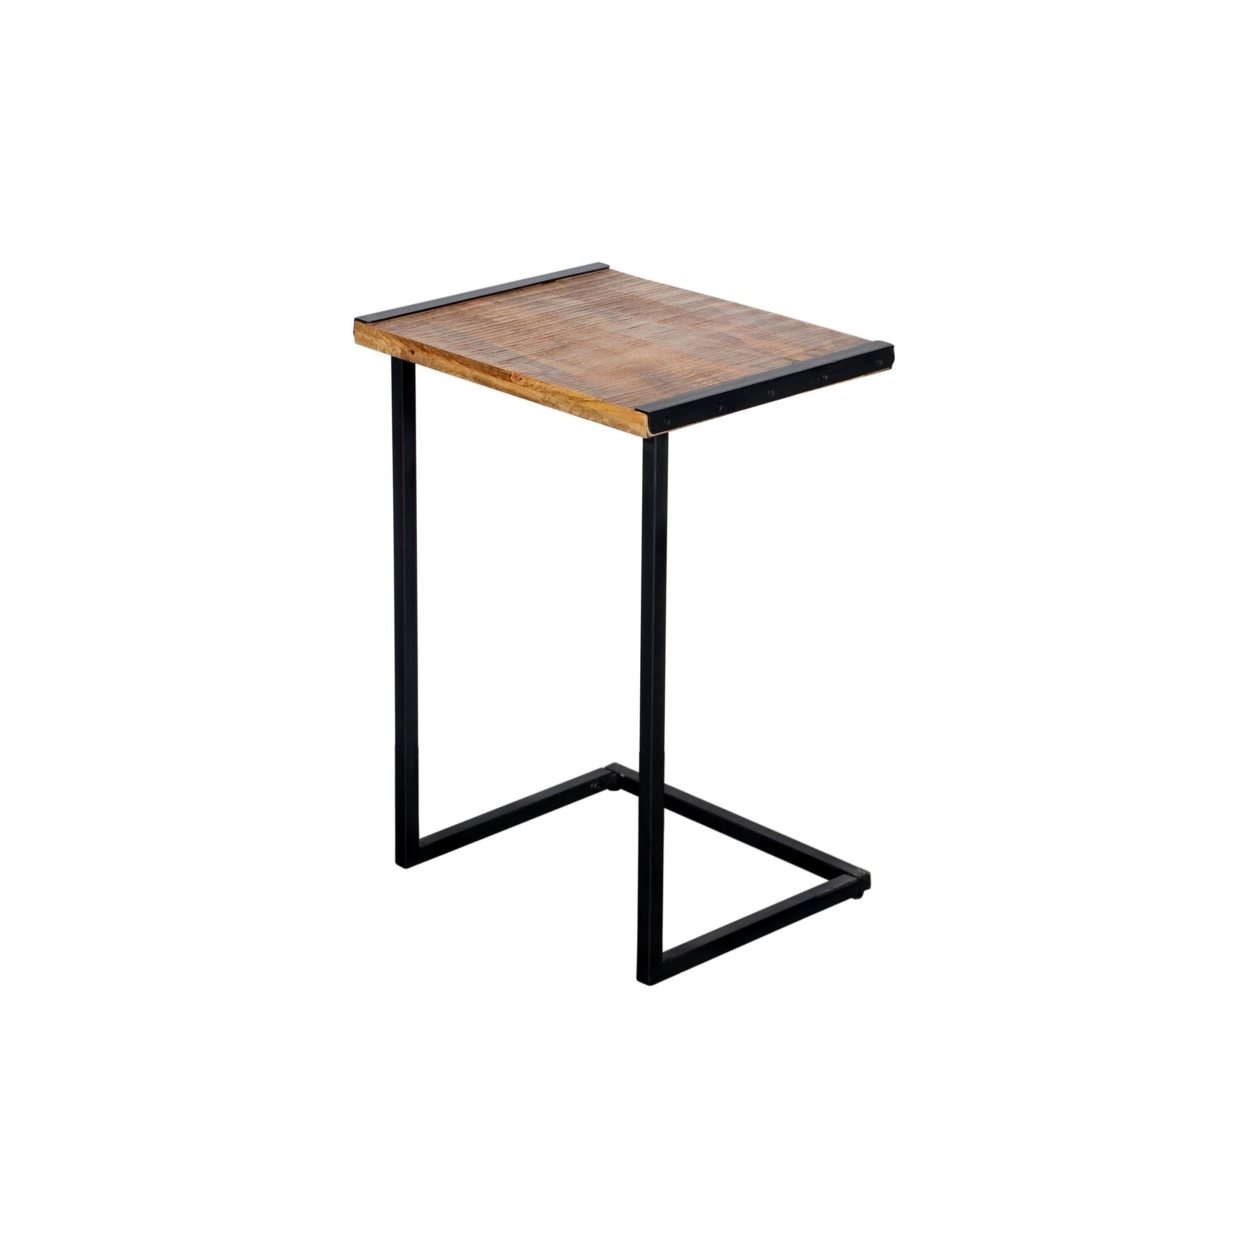 C Shape Mango Wood Sofa Side End Table With Metal Cantilever Base, Brown And Black- Saltoro Sherpi